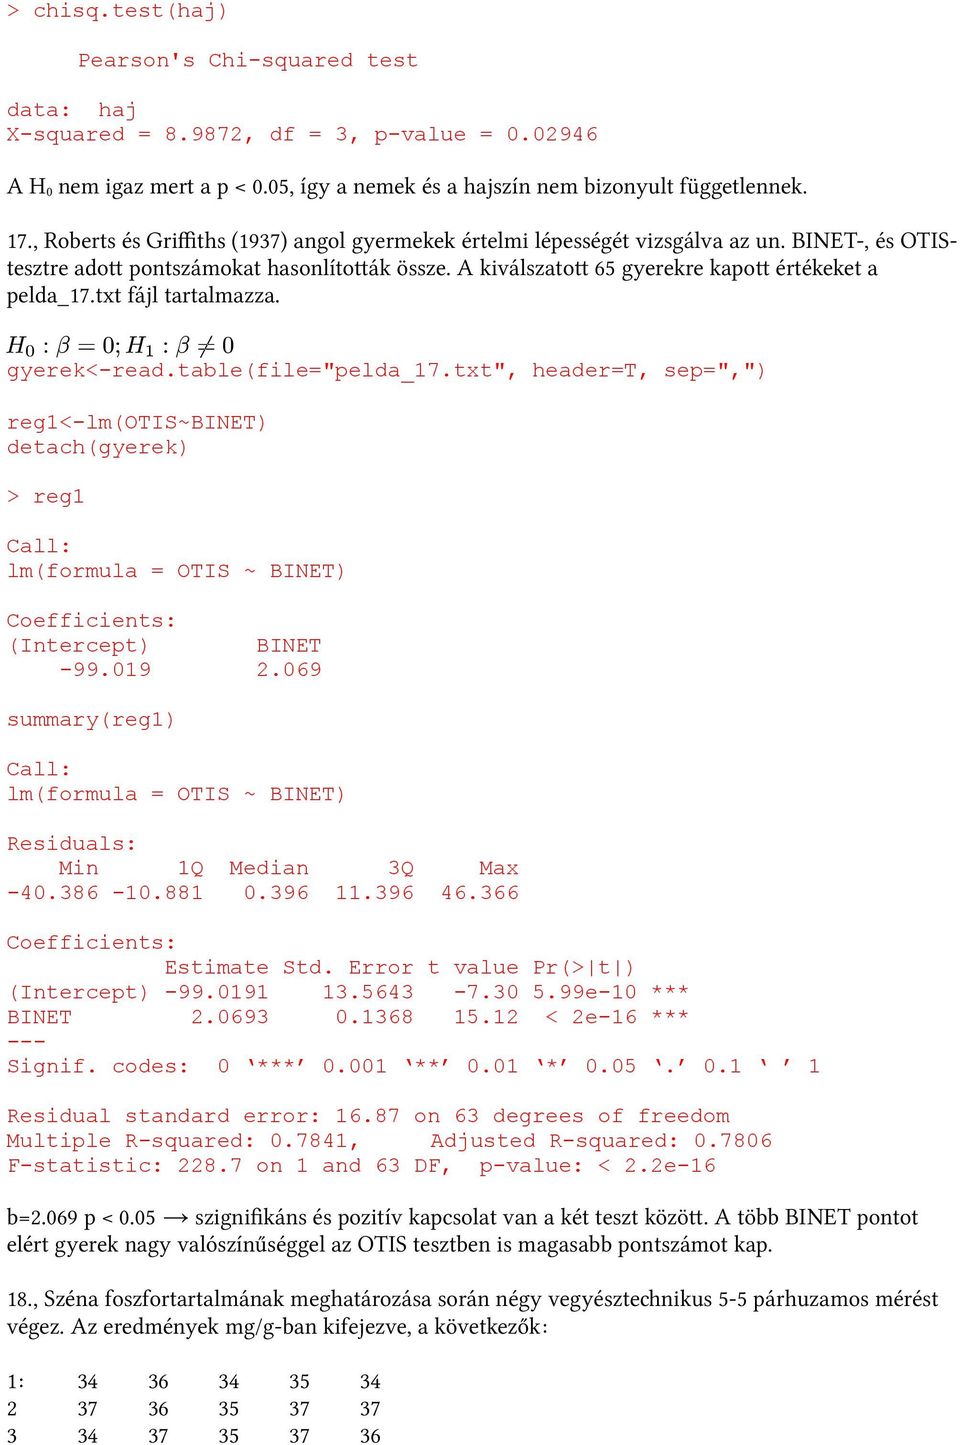 txt fájl tartalmazza. gyerek<-read.table(file="pelda_17.txt", header=t, sep=",") reg1<-lm(otis~binet) detach(gyerek) > reg1 Call: lm(formula = OTIS ~ BINET) Coefficients: (Intercept) BINET -99.019 2.